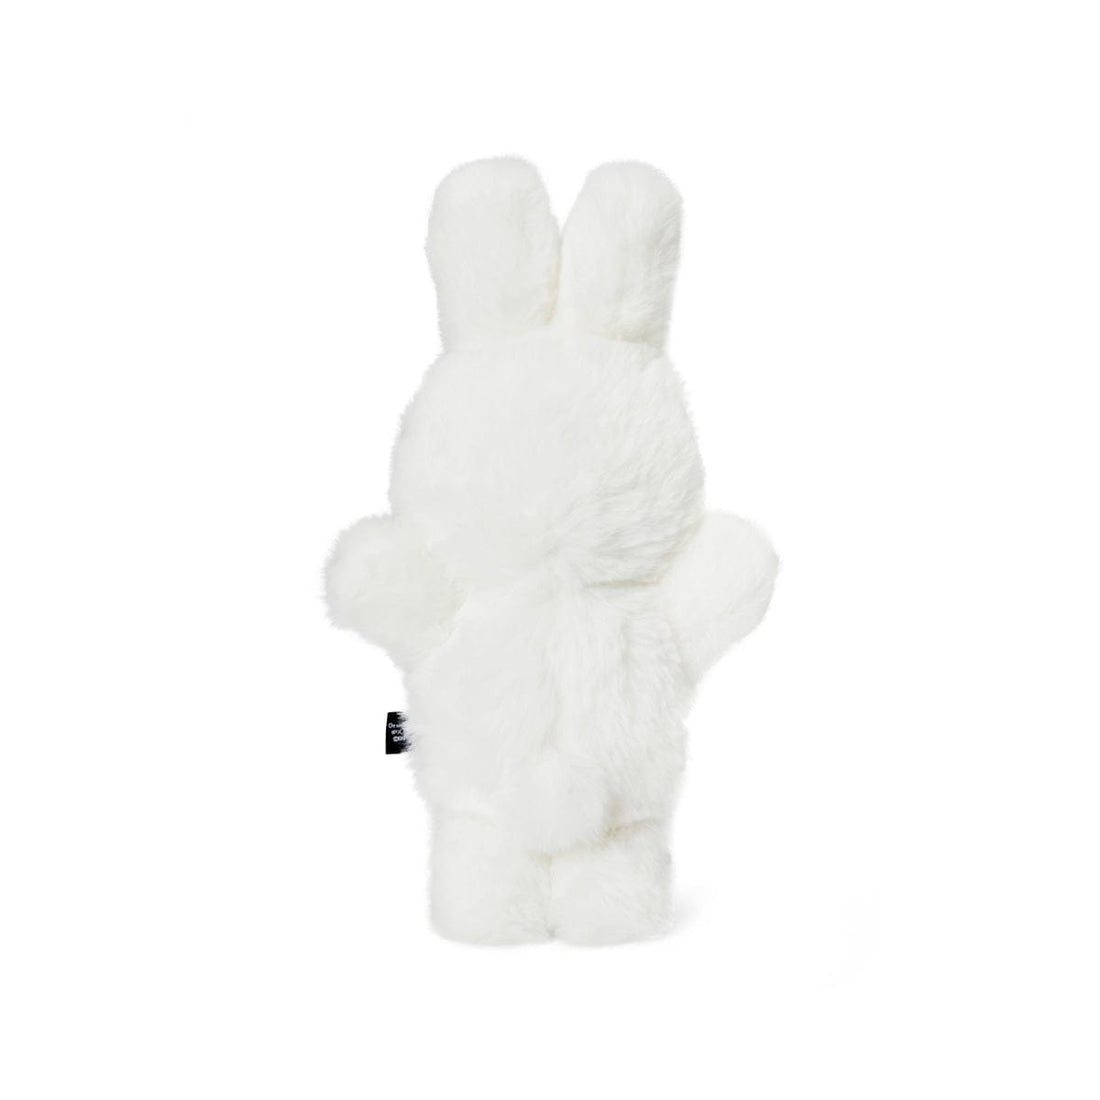 IPX ART TOYS WHITE BUWON B.B.Rabbit PLUSH STUFFED TOYS WHITE [IPX ART COLLECTION]